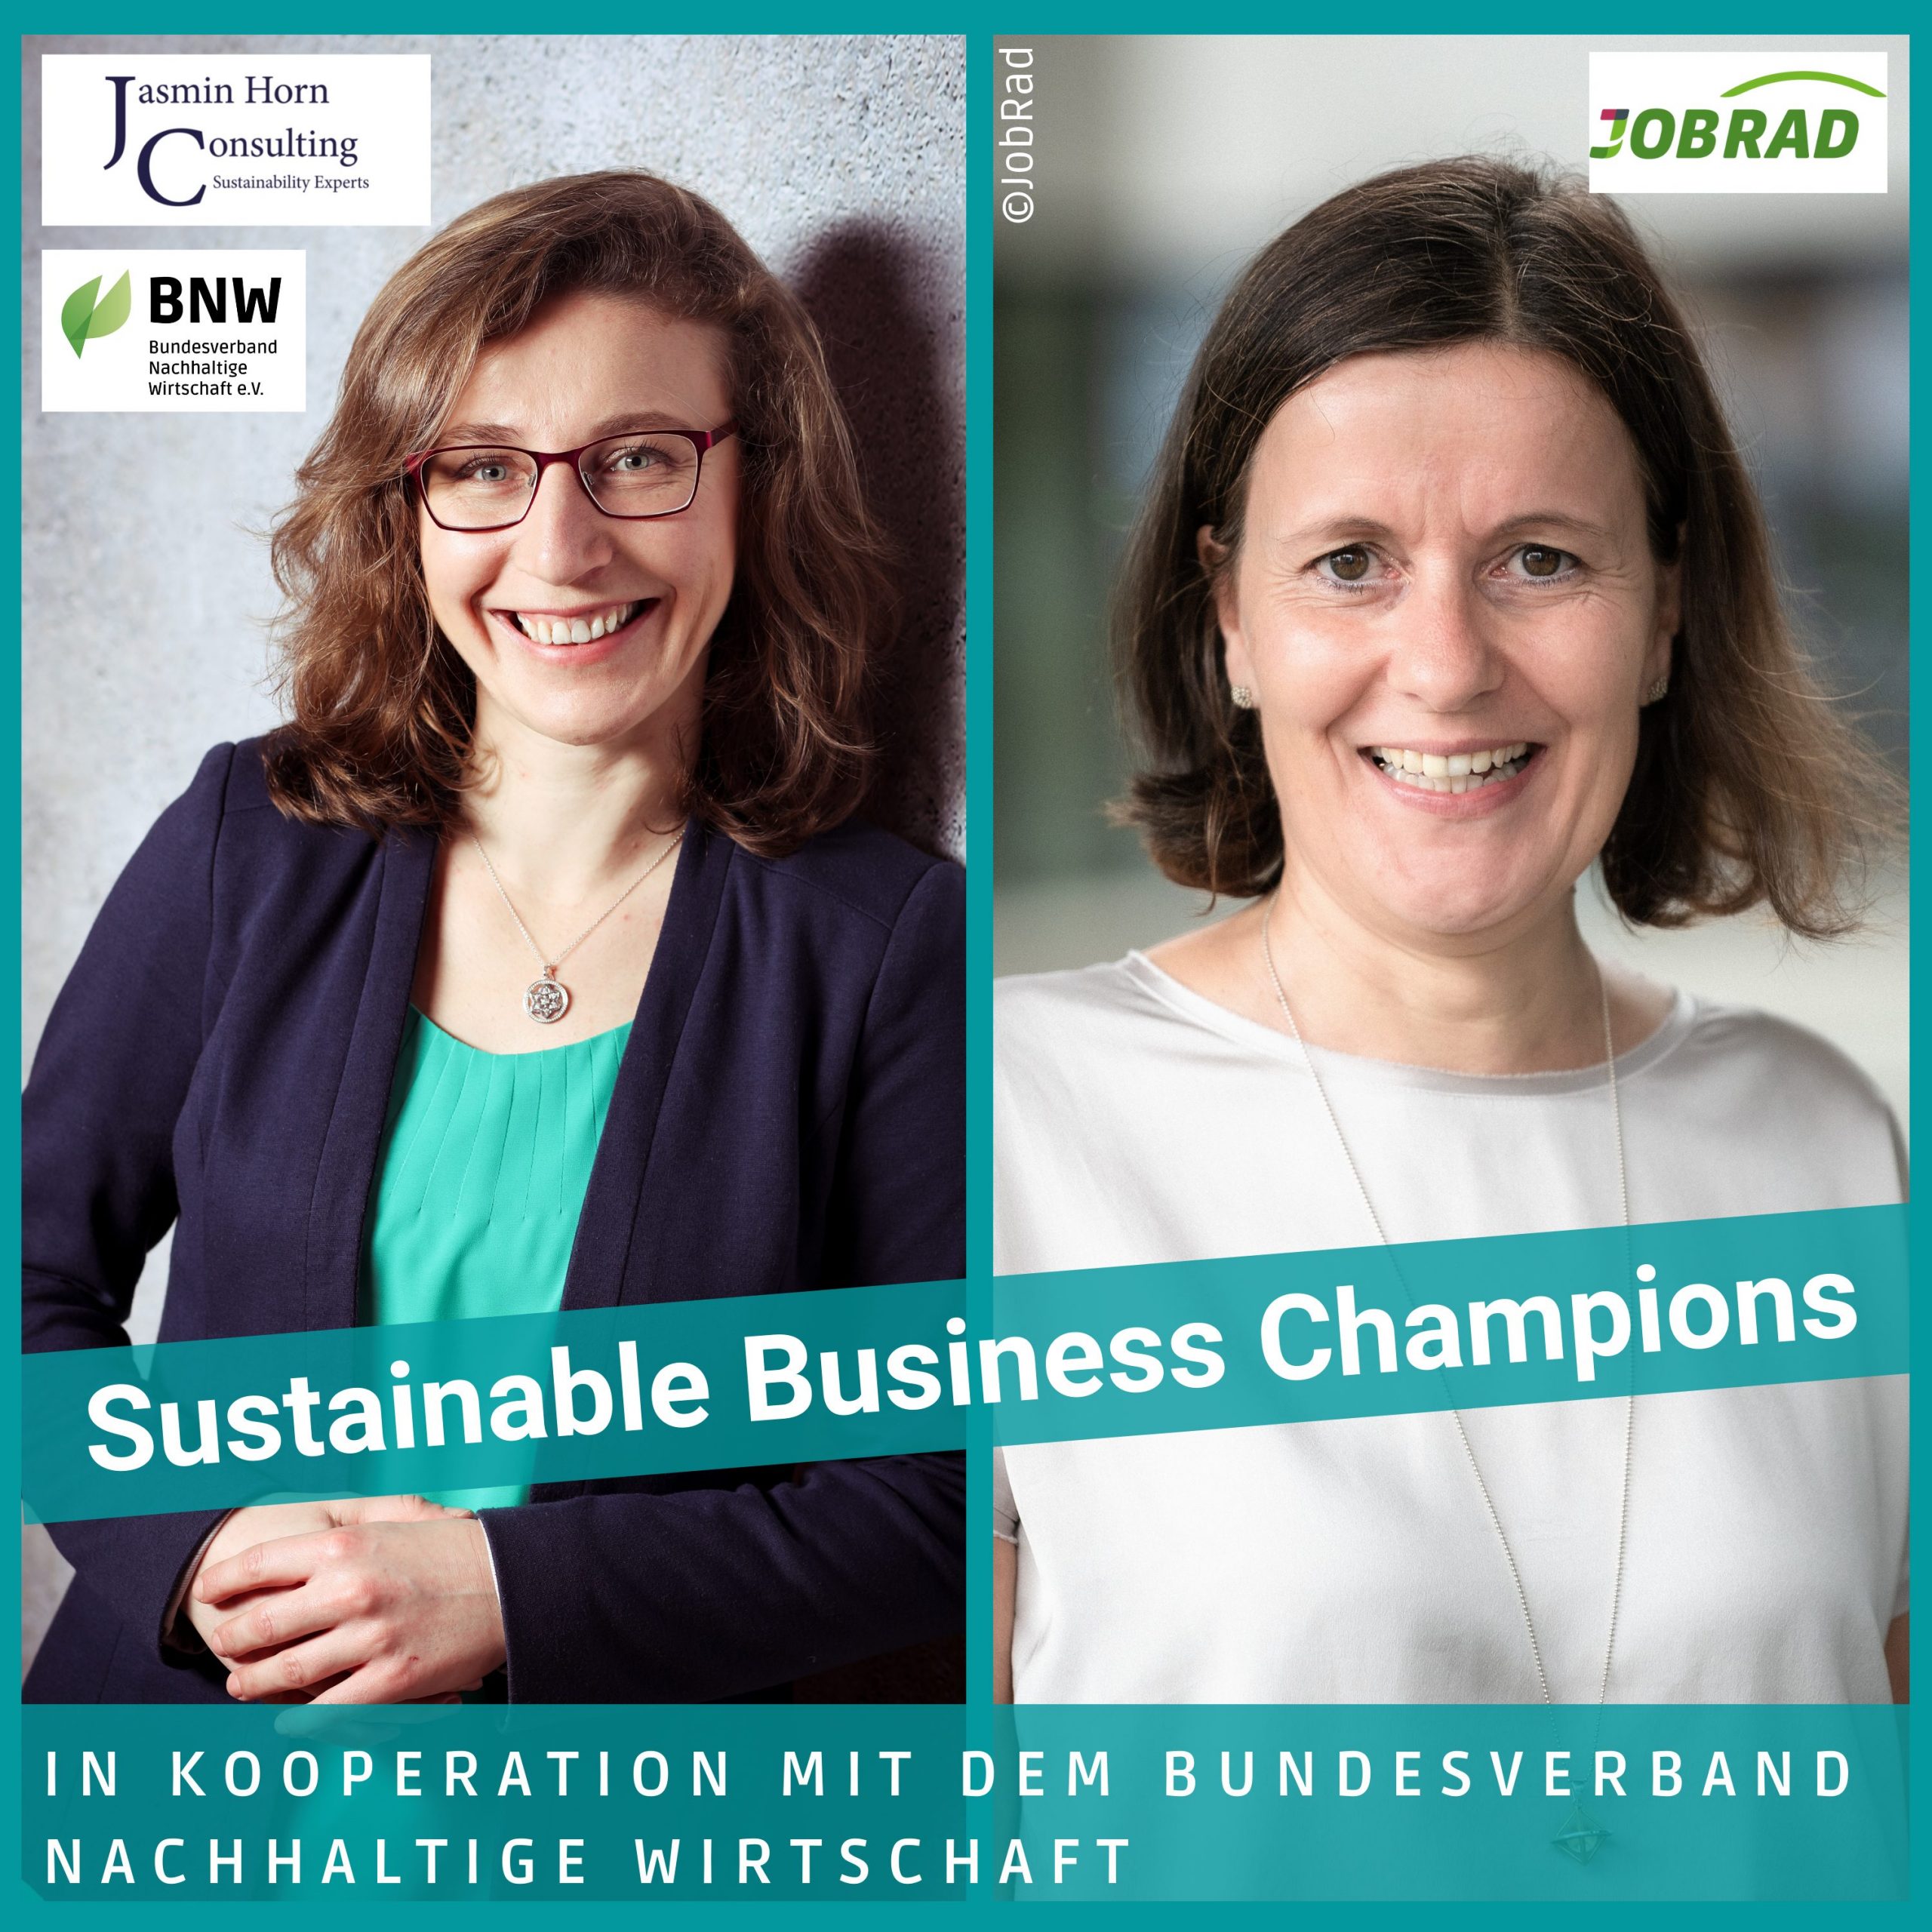 Sustainable-Business-Champions-23-Mobilitaetswende-mit-Andrea-Kurz_Jobrad-und-Jasmin-Horn